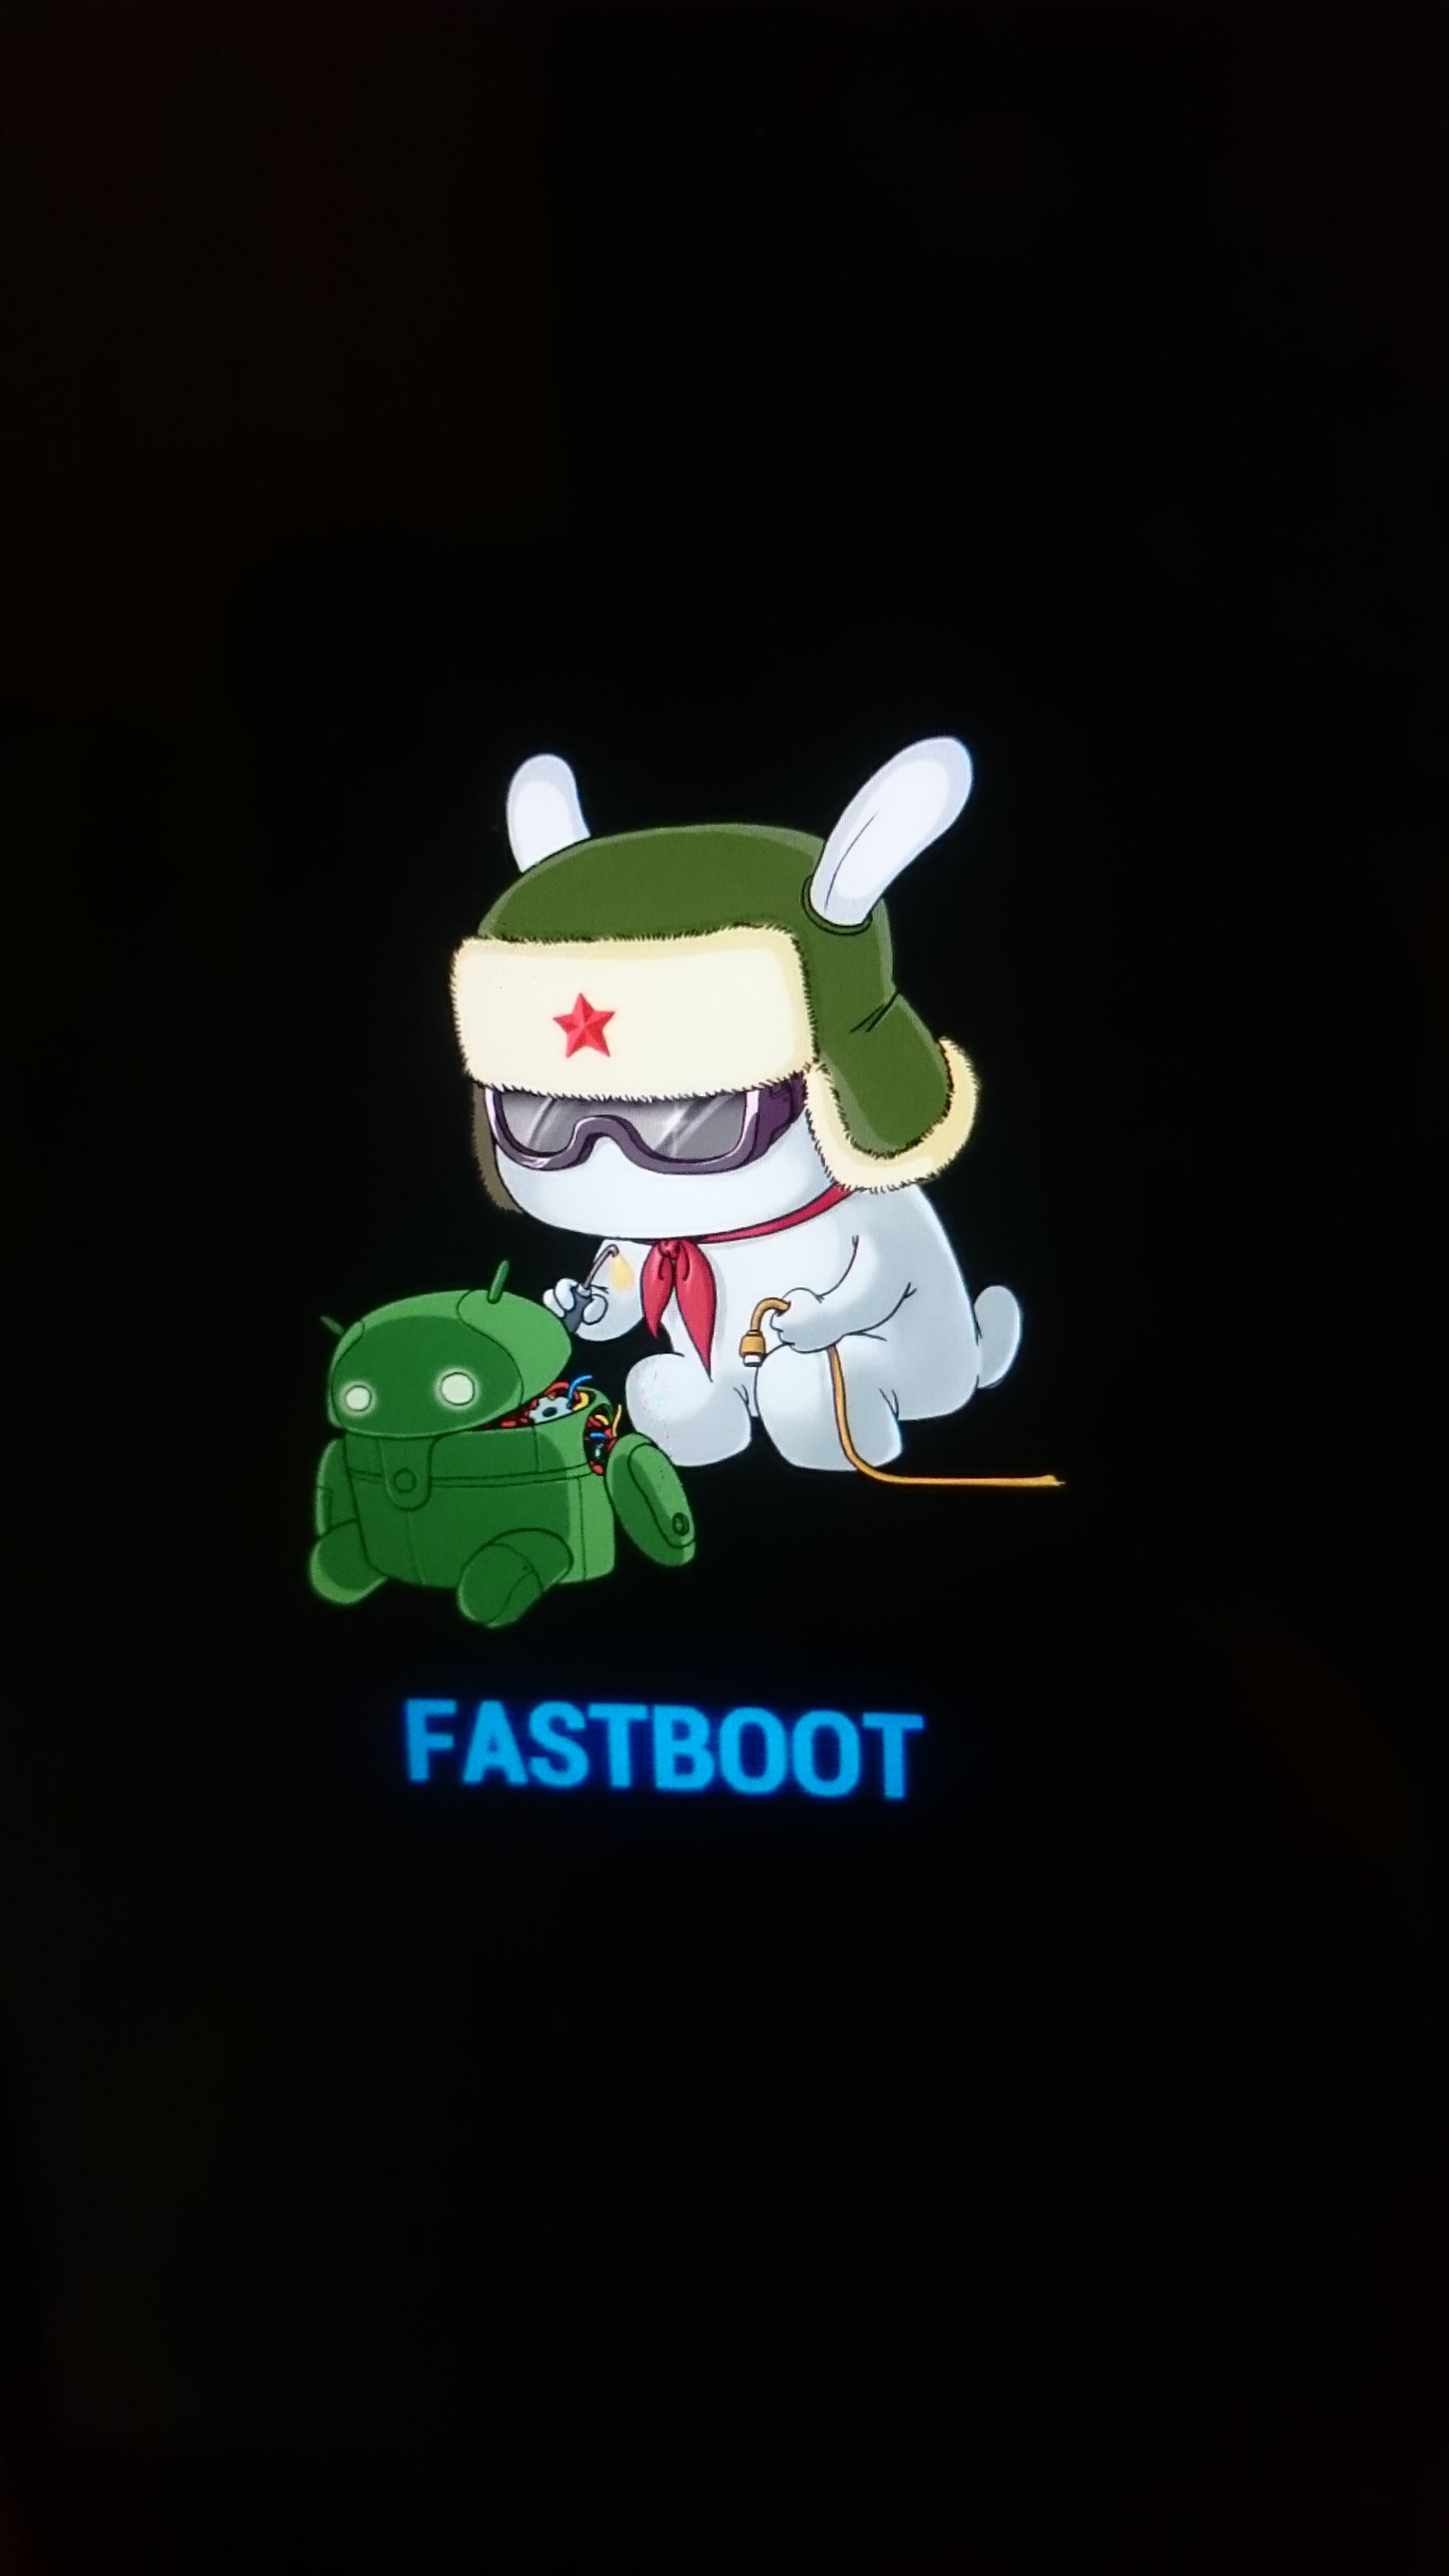 Redmi note 8 fastboot. Кролик Xiaomi Fastboot. Заяц андроид Fastboot. Xiaomi заяц Fastboot logo. Андроид картинка Fastboot.